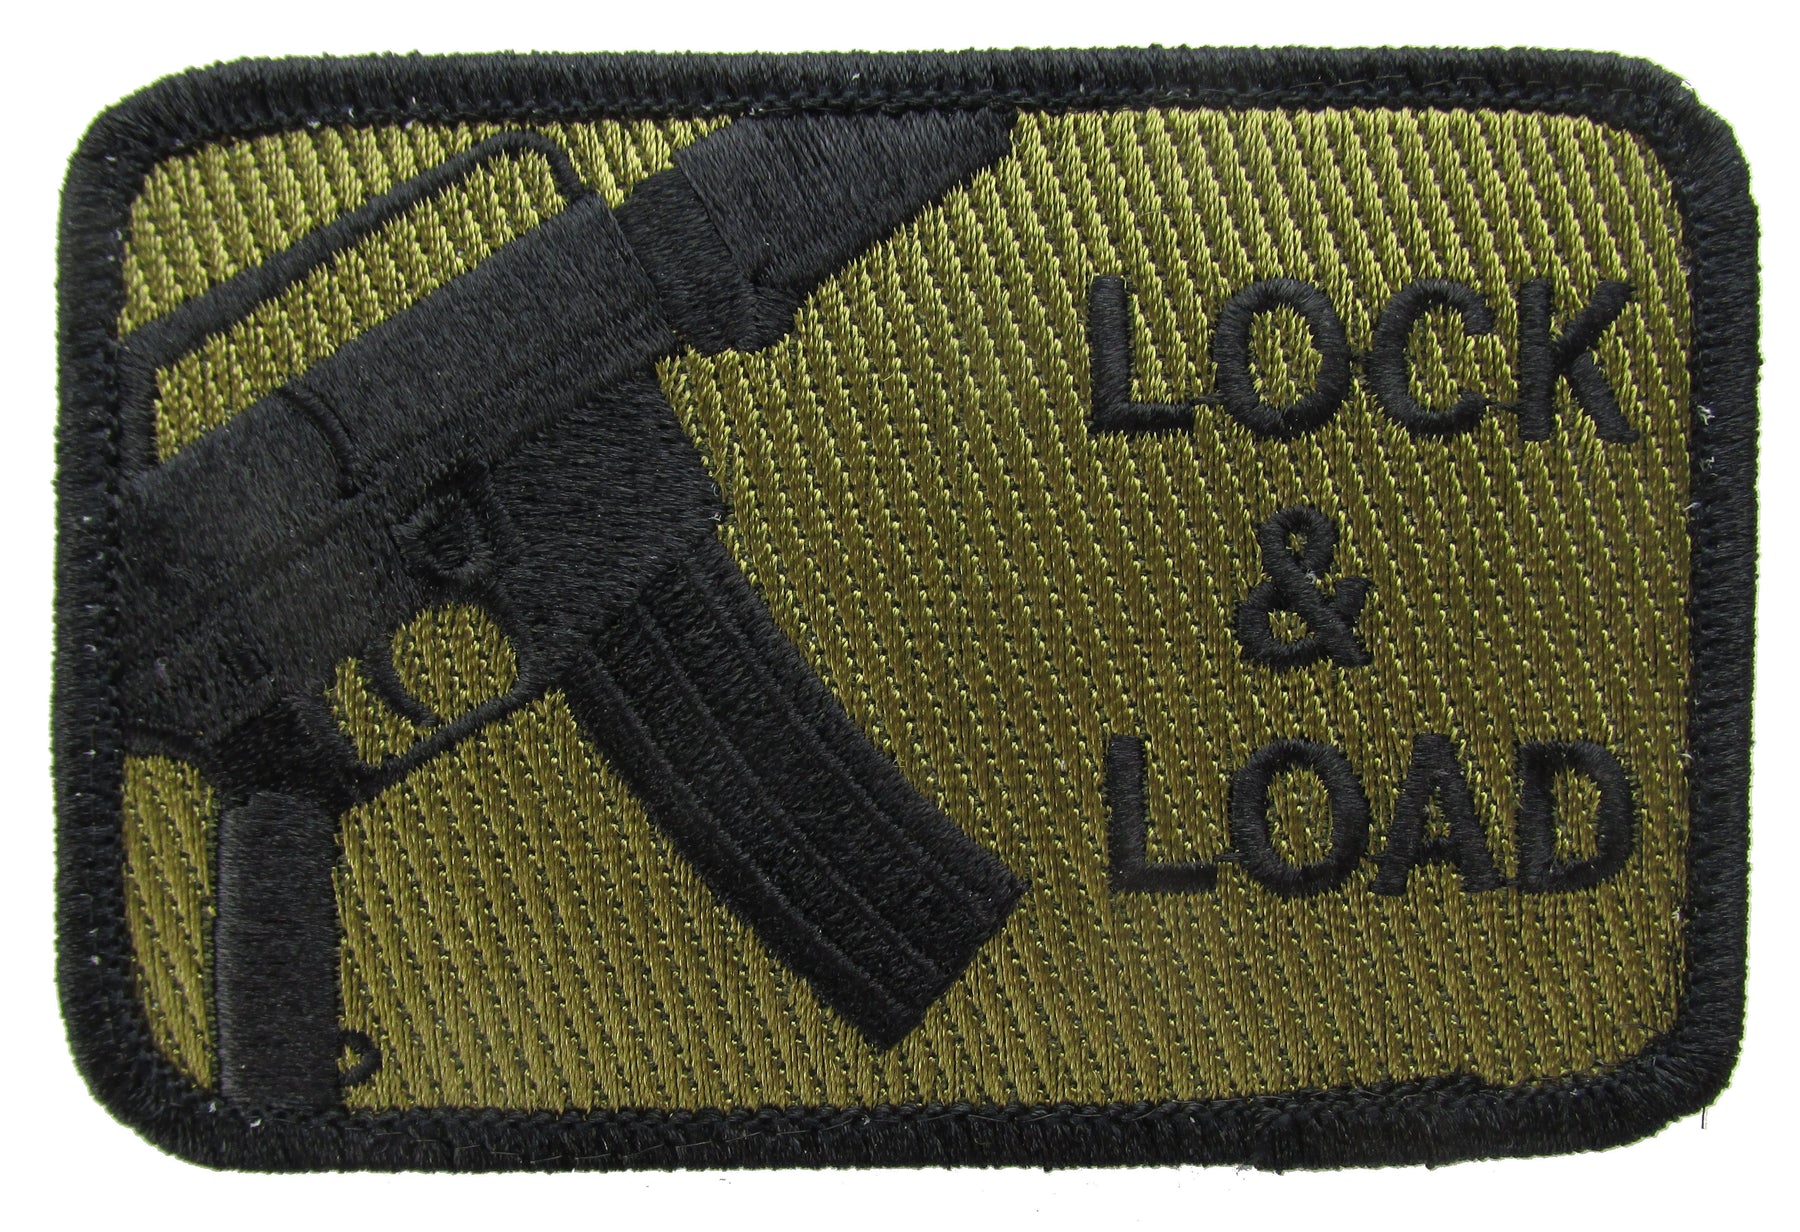 Lock & Load M16 Morale Patch - Various Colors